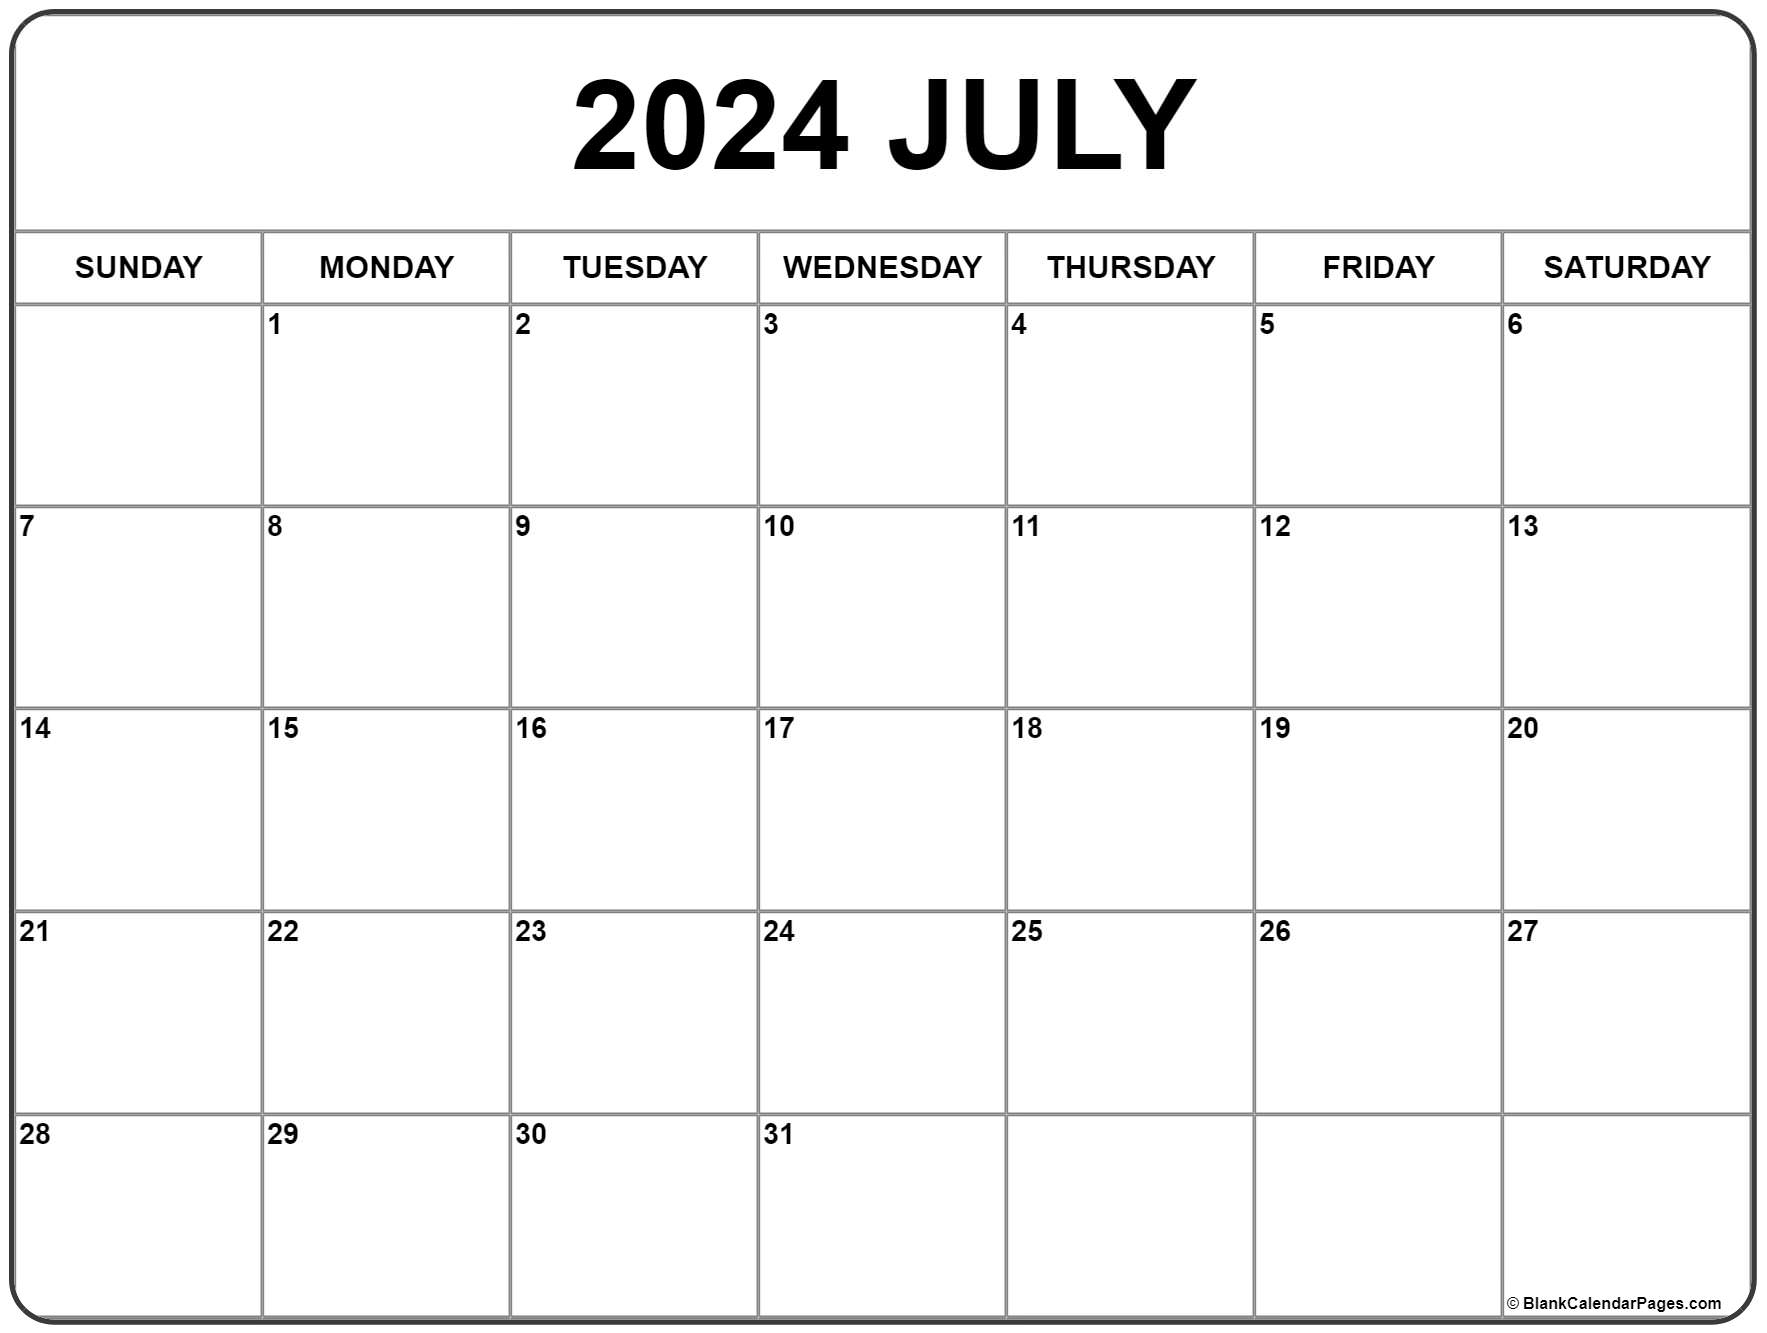 July 2021 Blank Calendar July 2021 calendar | free printable monthly calendars